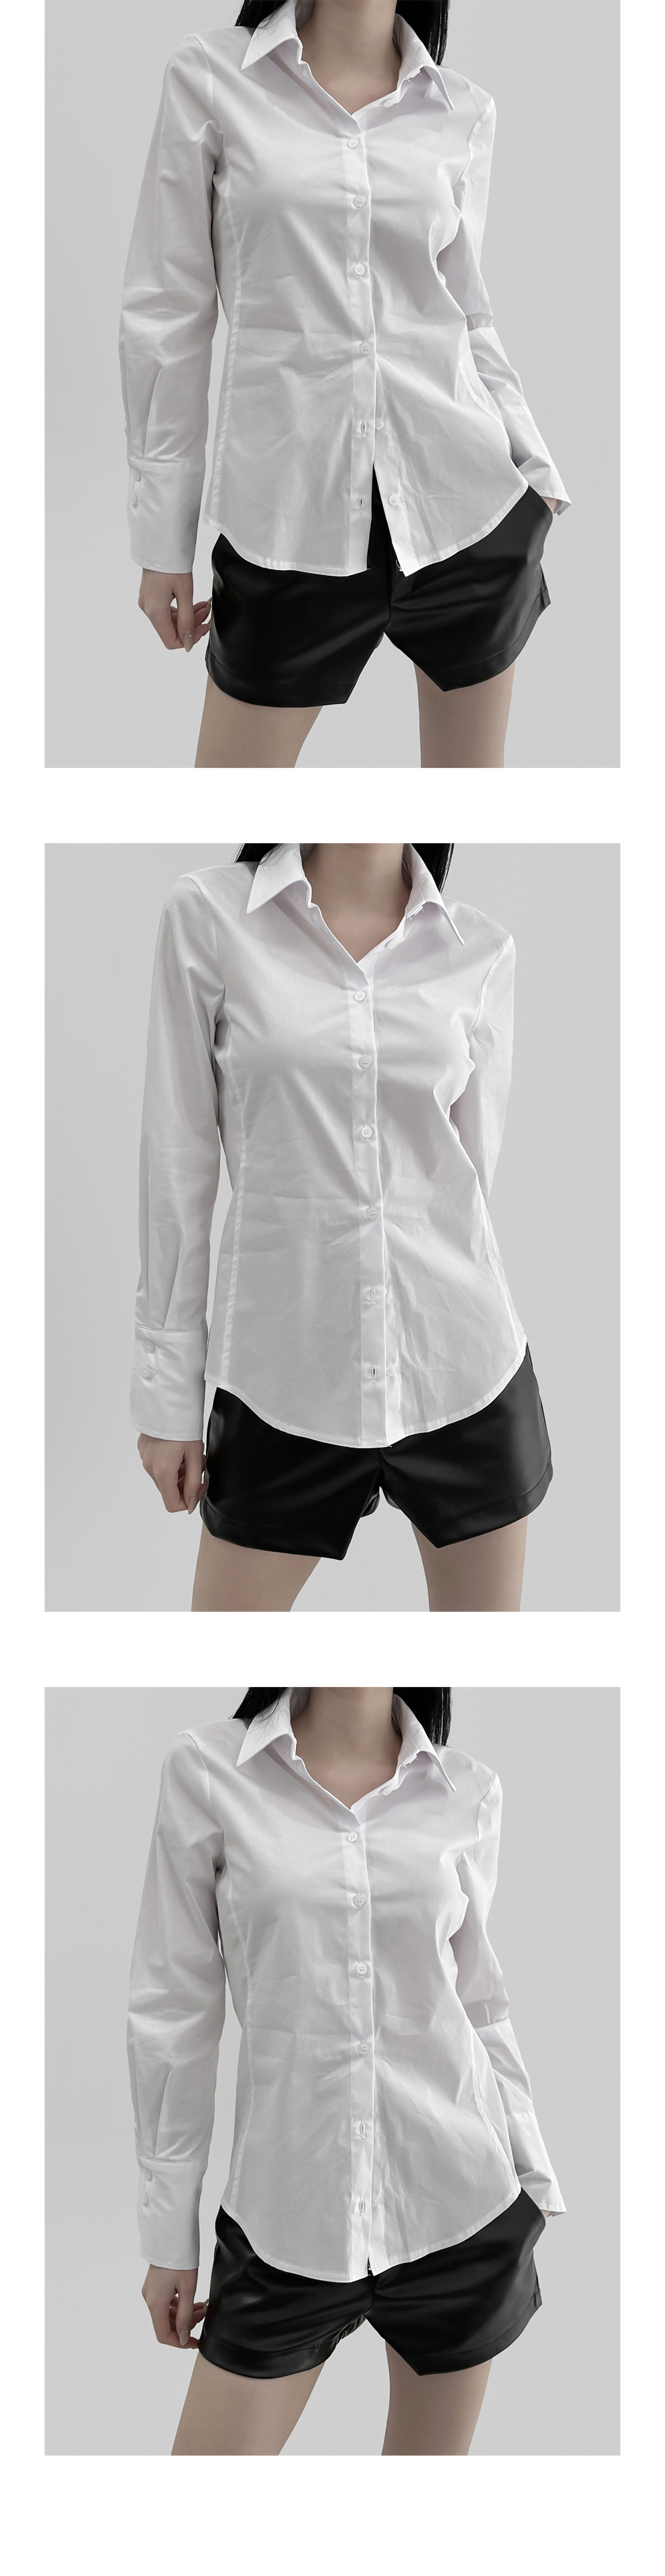 blouse model image-S1L2